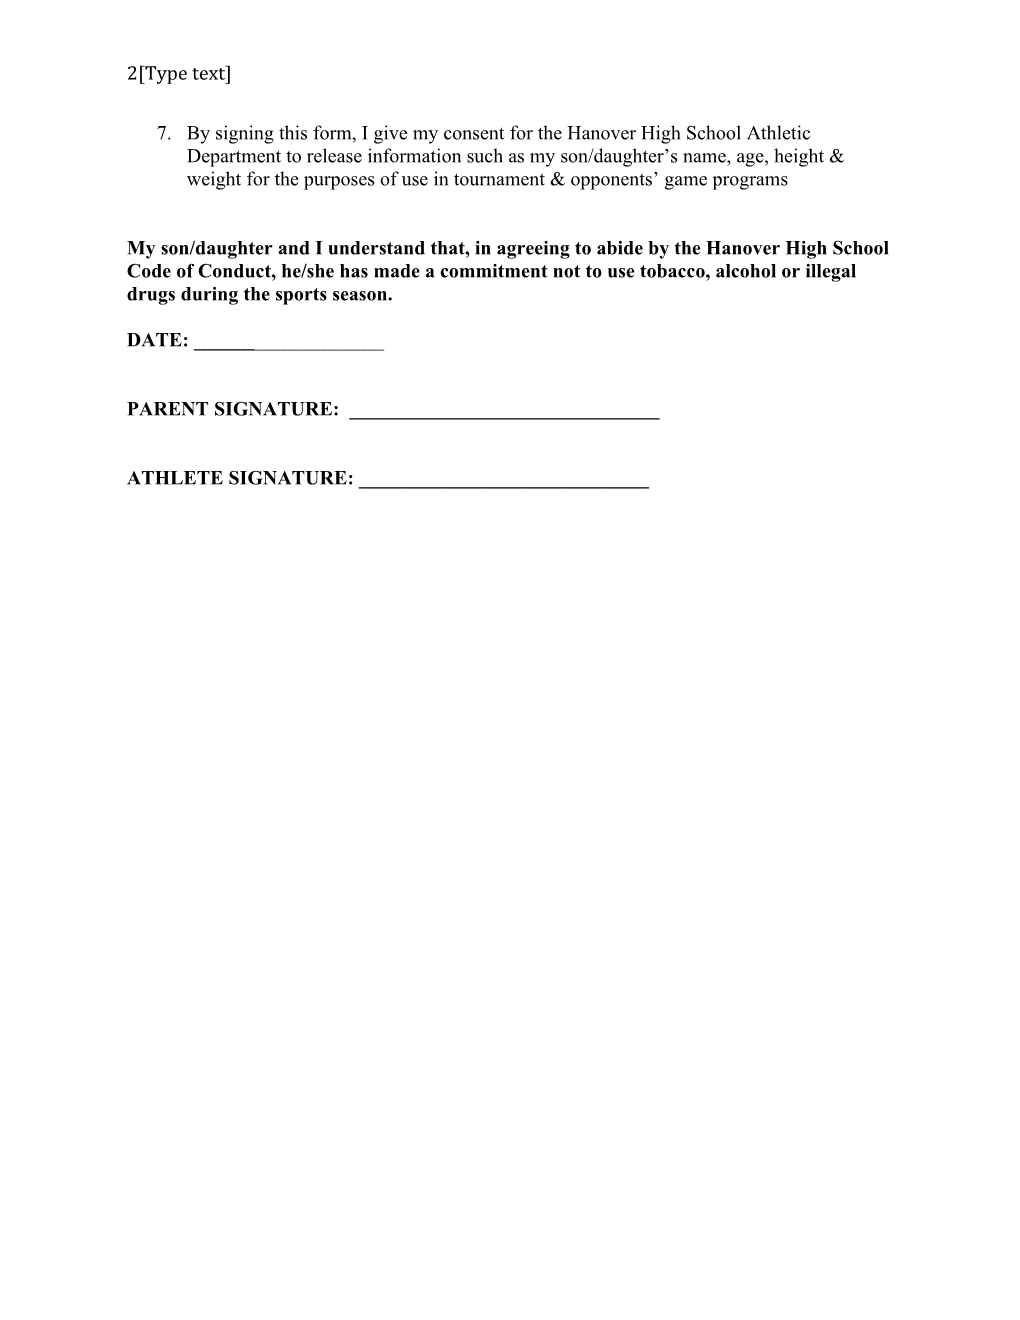 Hanover High School Student-Athlete Consent Form